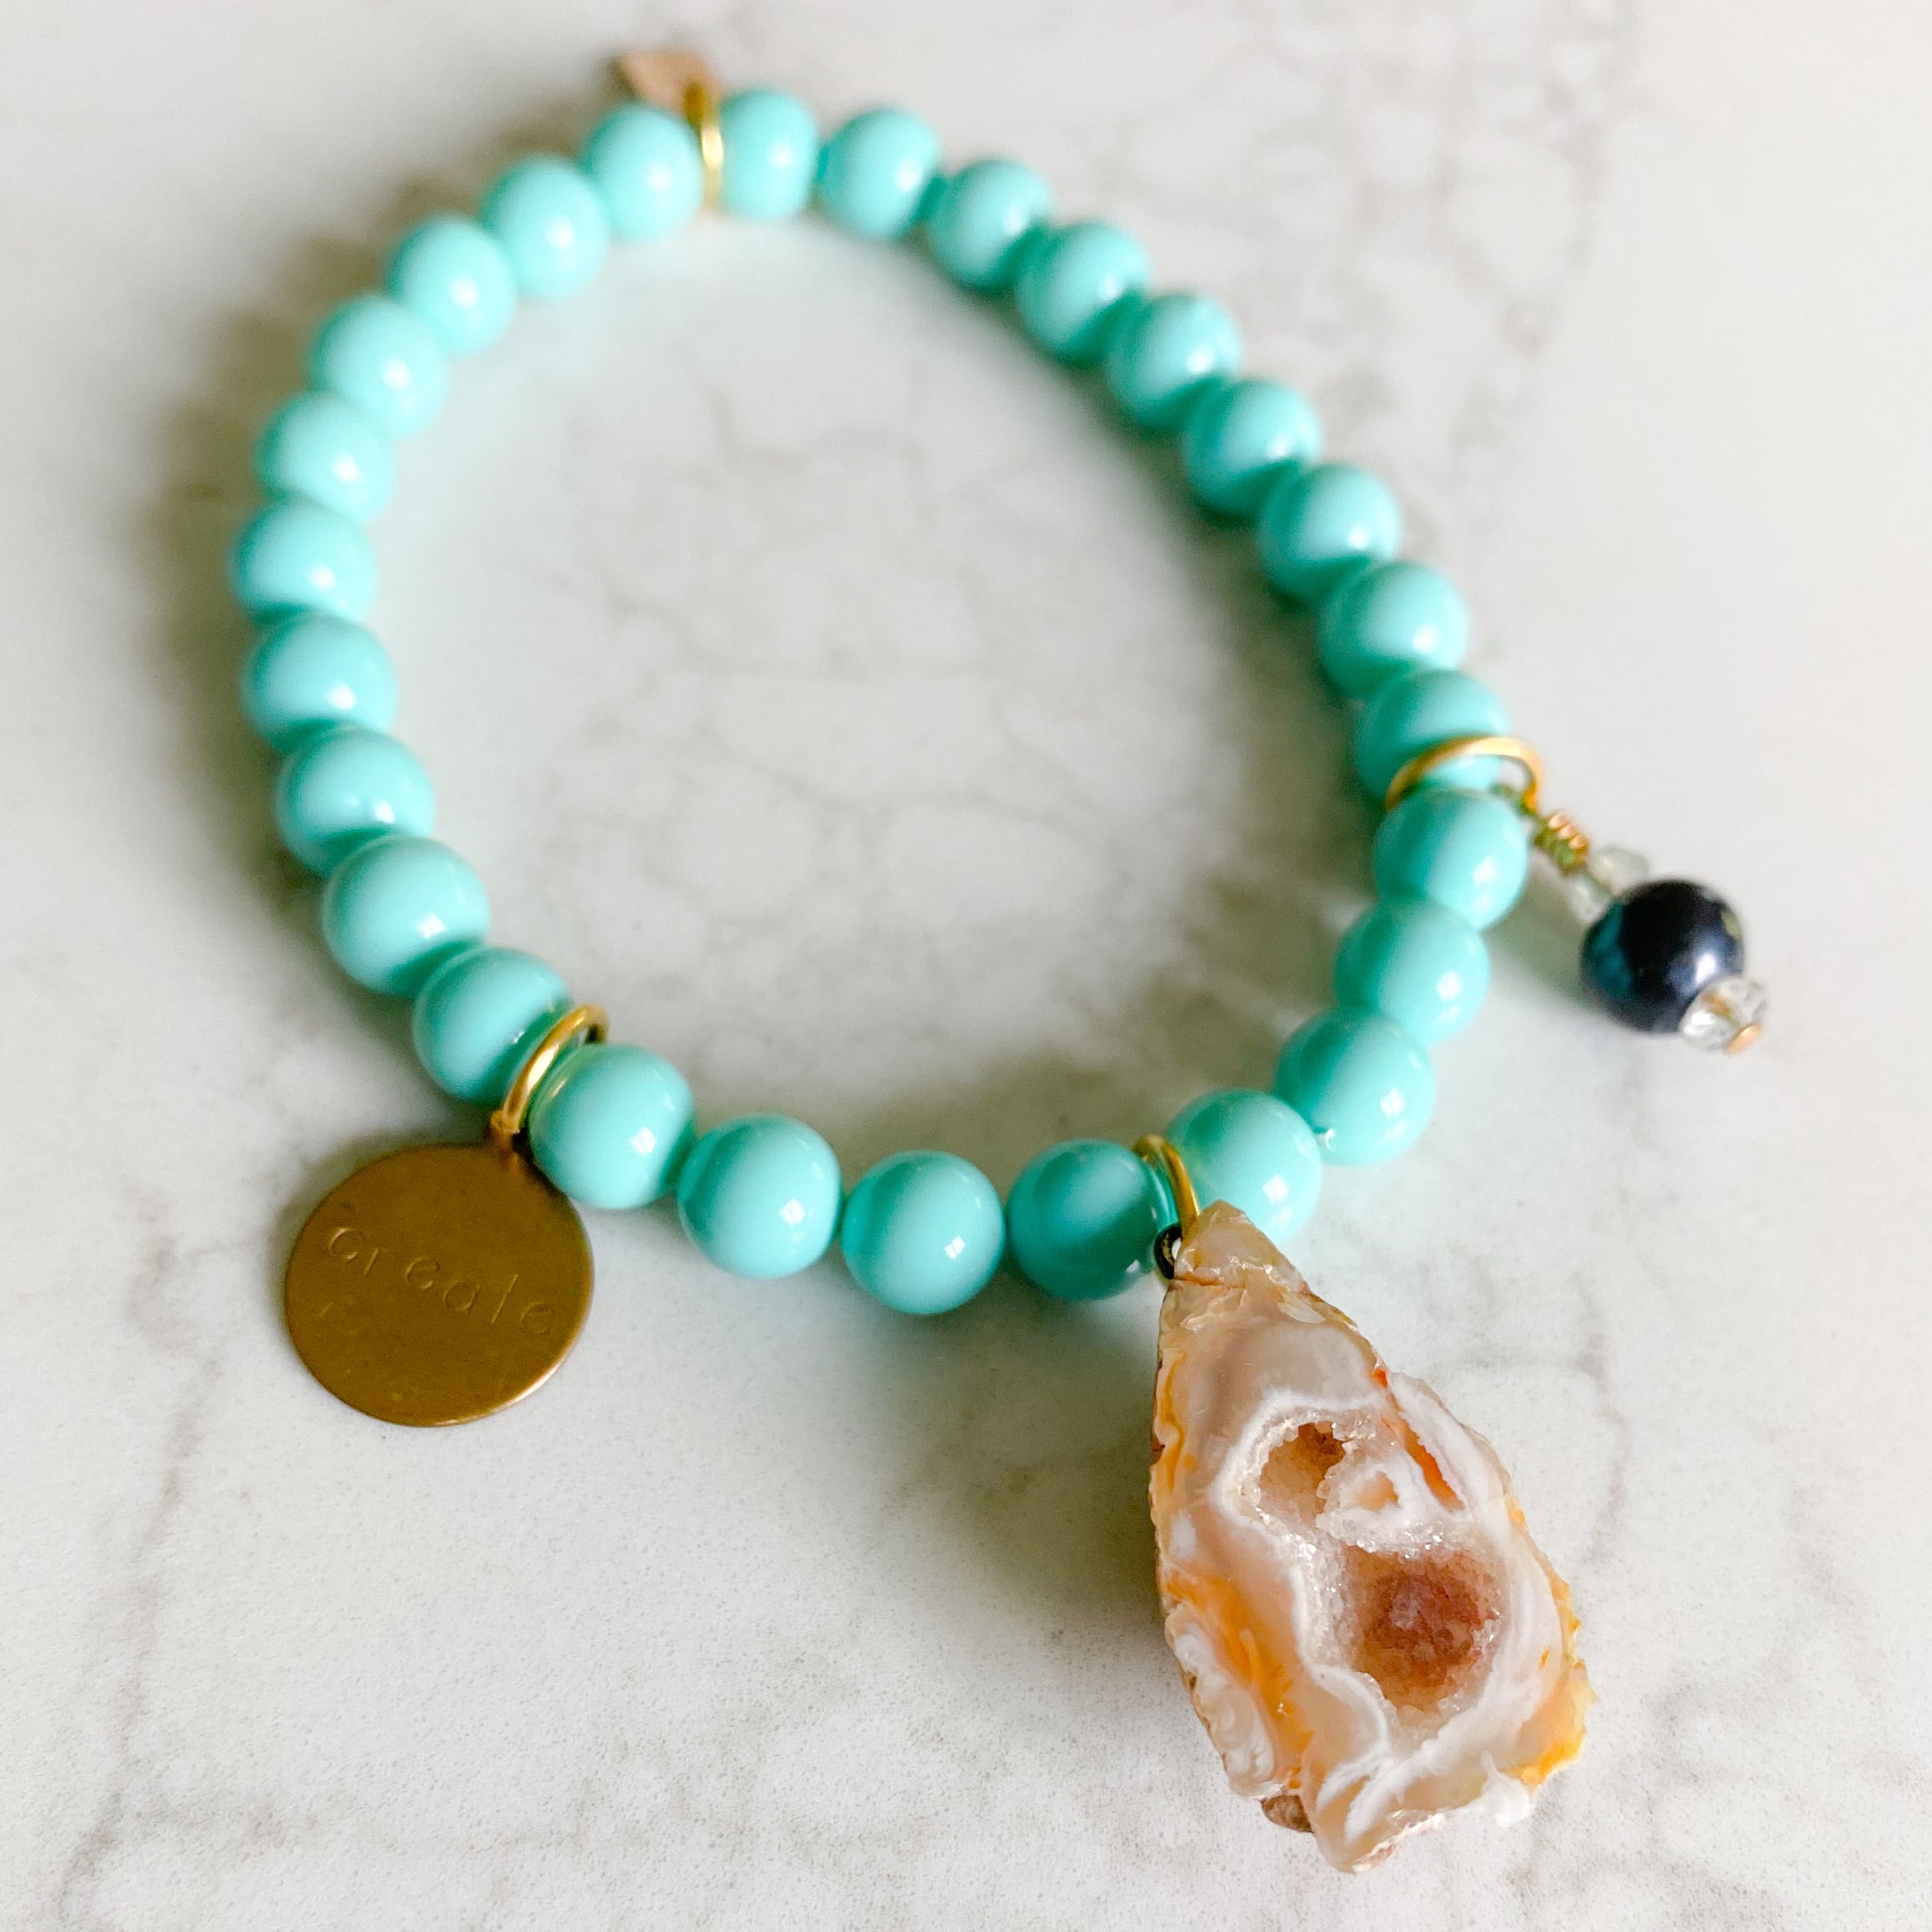 Palm Springs Bracelet - BelleStyle turquoise druzy quartz freshwater pearl